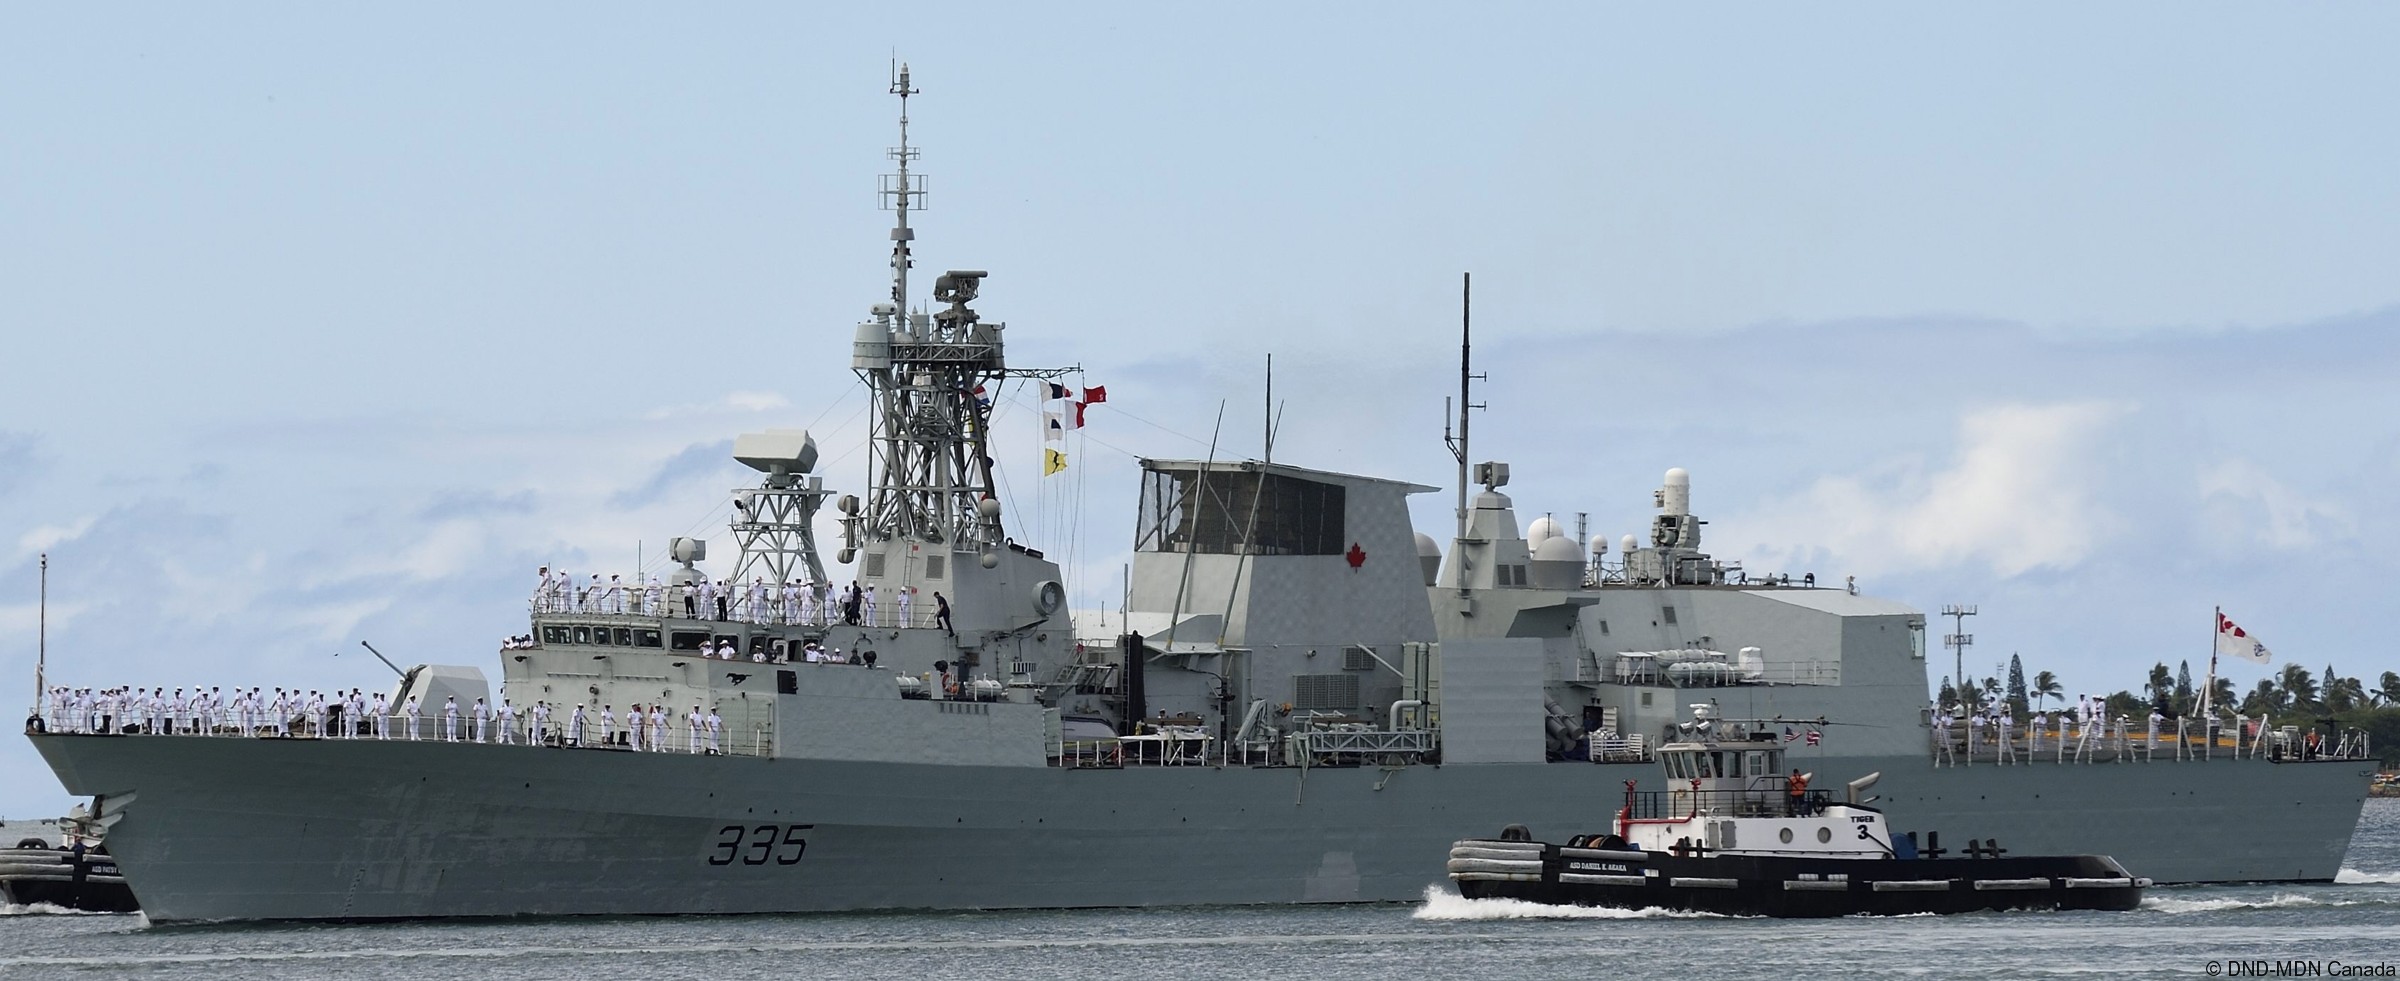 ffh-335 hmcs calgary halifax class helicopter patrol frigate ncsm royal canadian navy 75